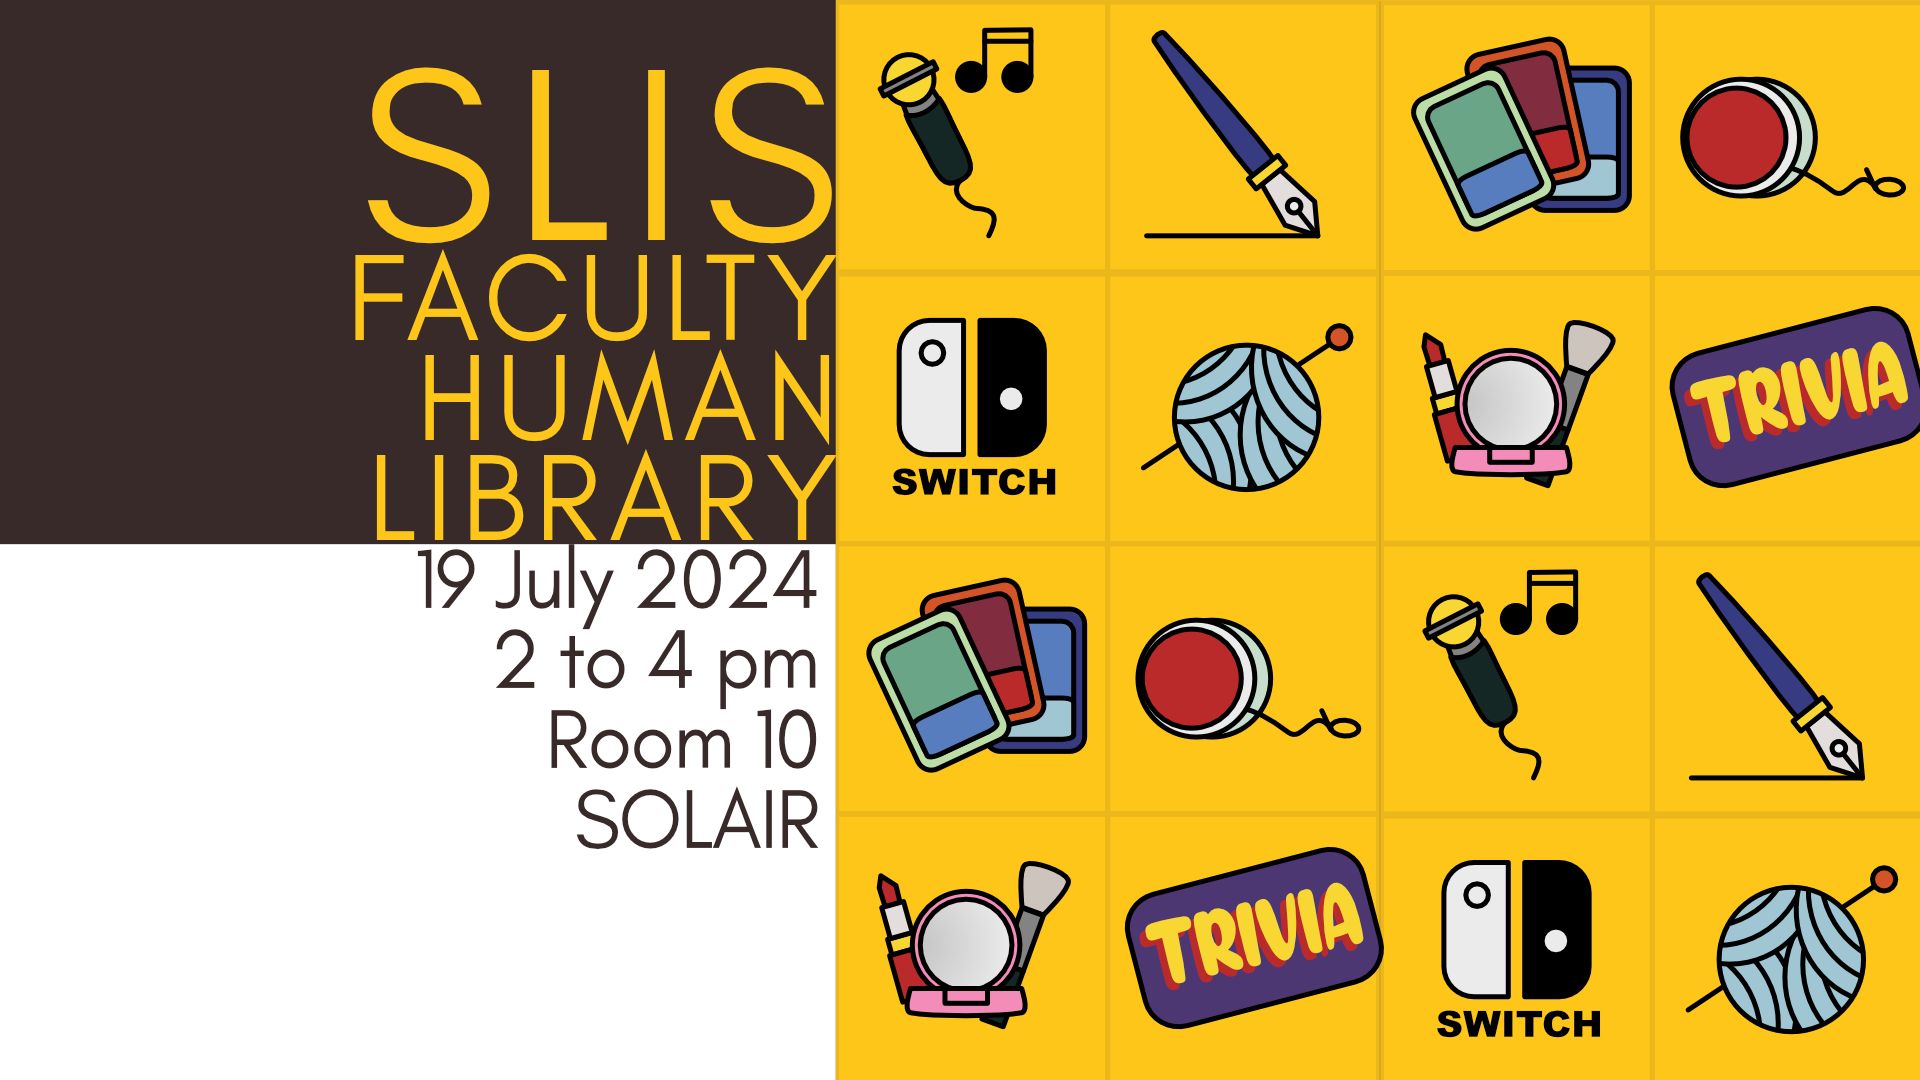 SLIS Faculty Human Library